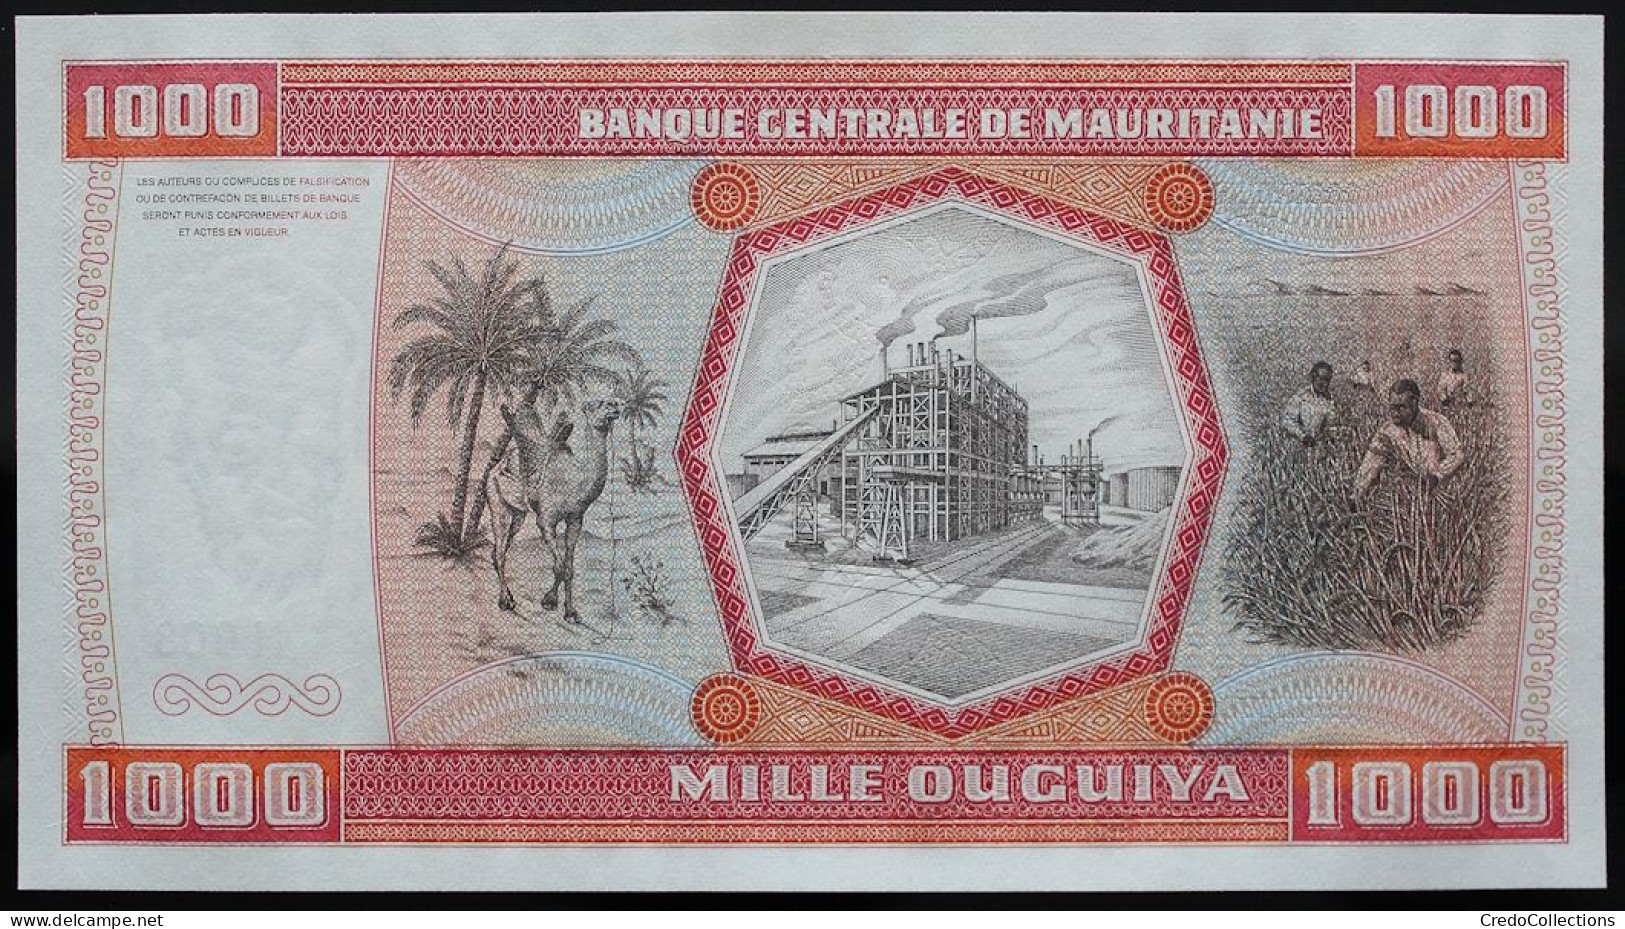 Mauritanie - 1000 Ouguiya - 1981 - PICK 3Da - NEUF - Mauritania